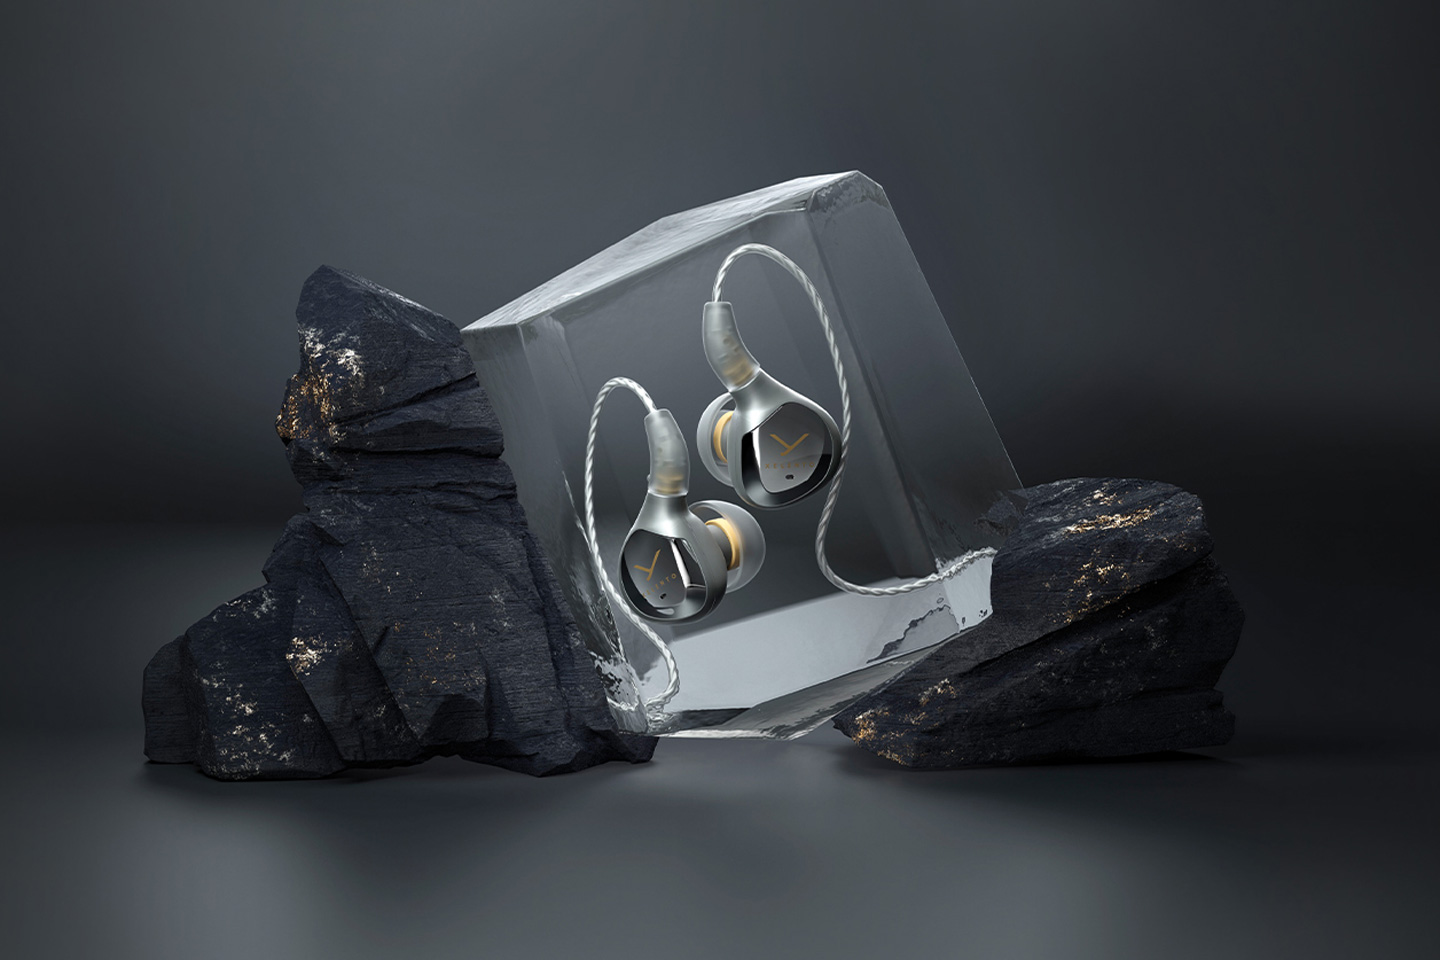 beyerdynamic reveals the $1,199 XELENTO earphones, their latest piece of ‘wireless audio jewelry’